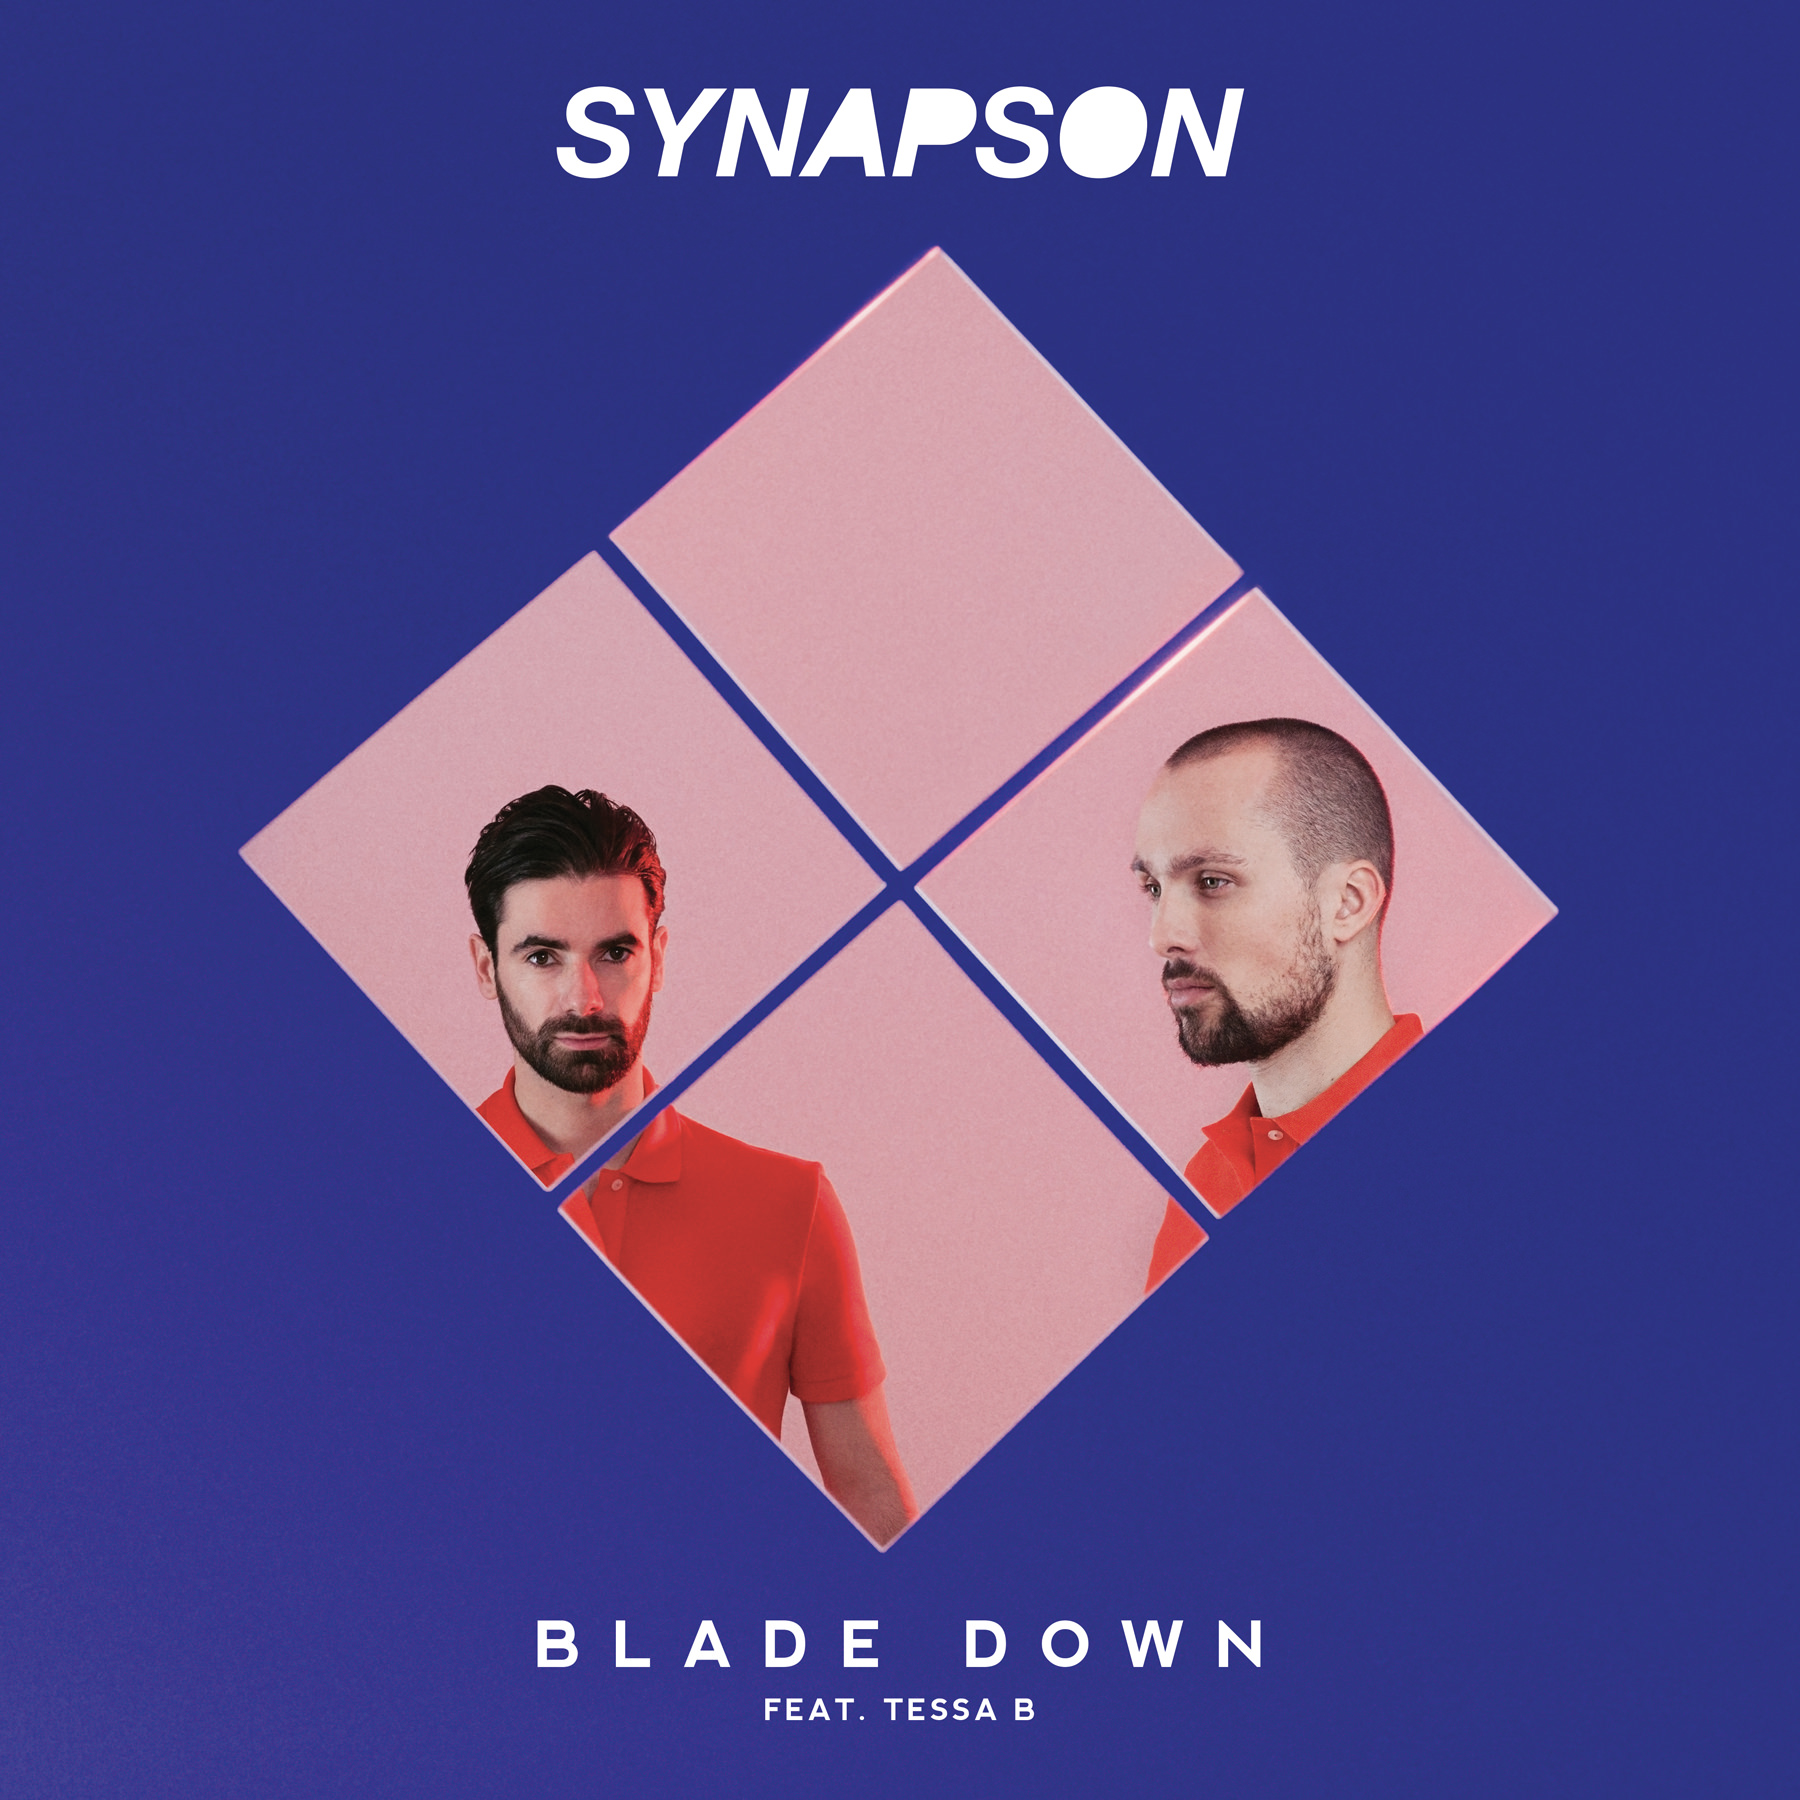 blade-down-synapson-tessa-b-convergence